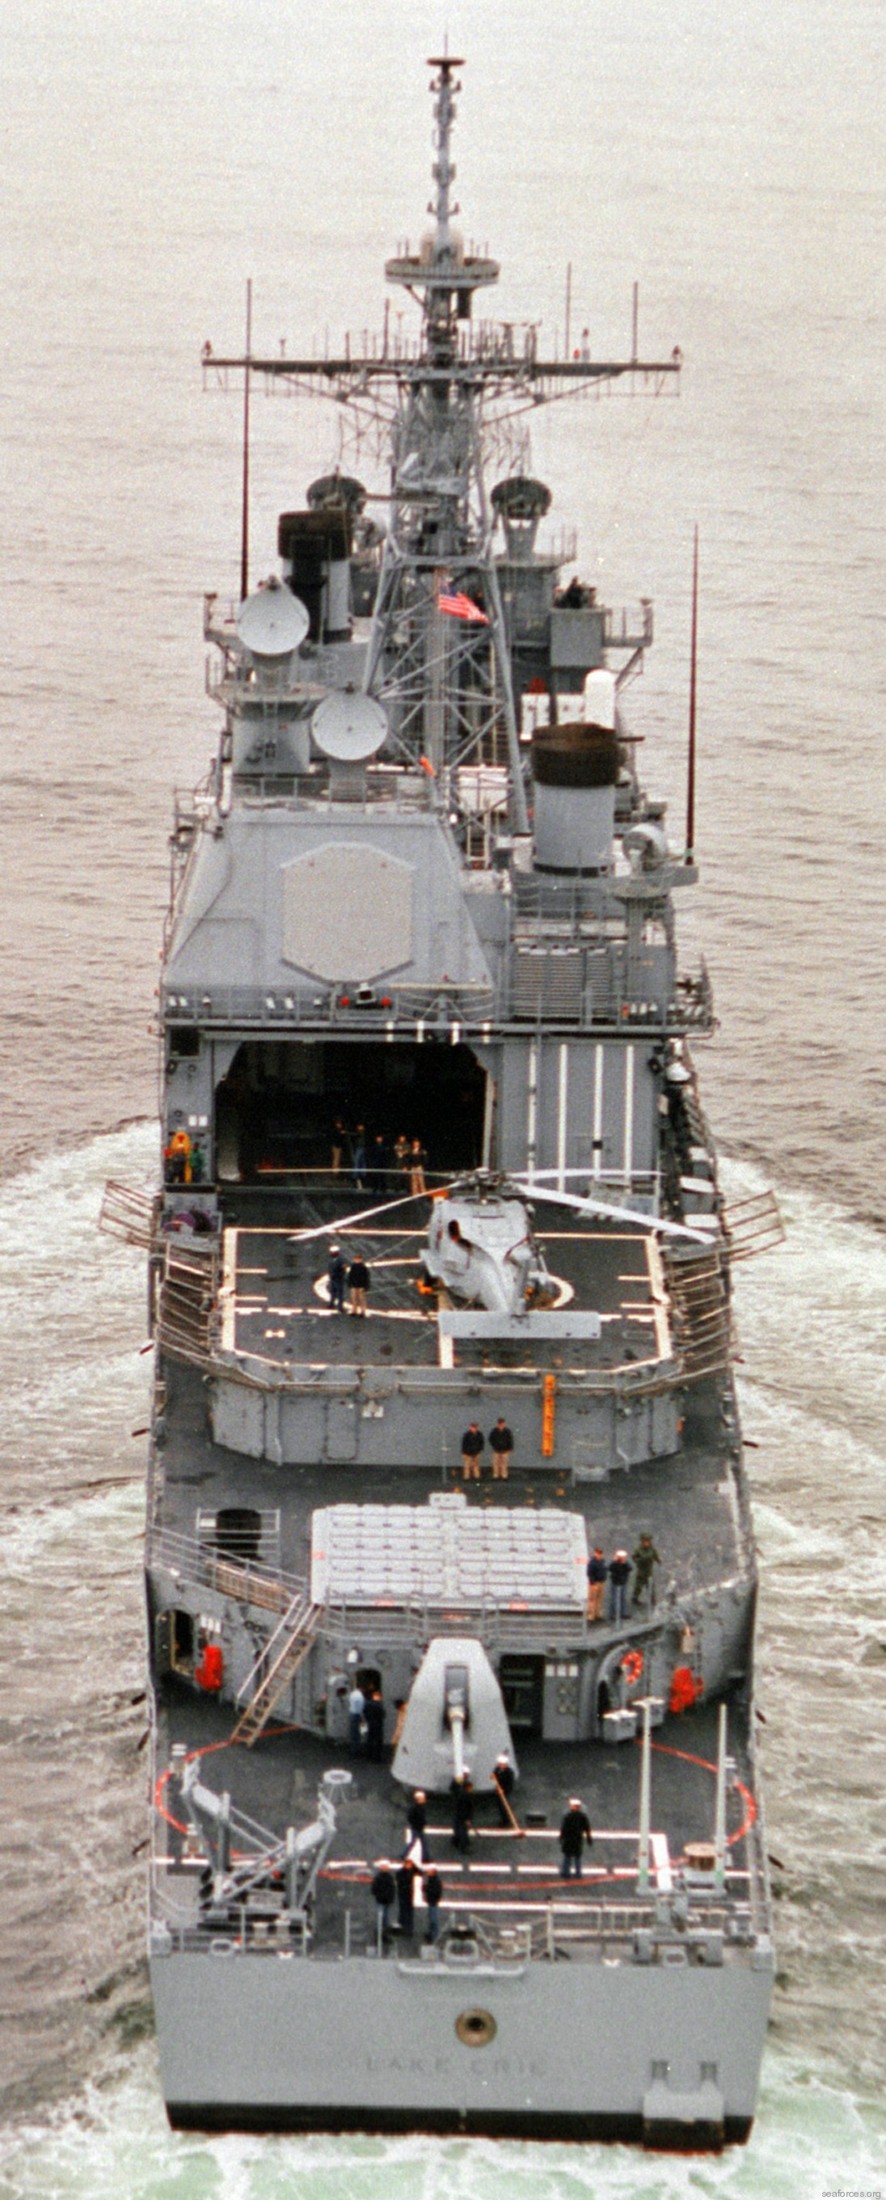 cg-70 uss lake erie ticonderoga class guided missile cruiser navy 80